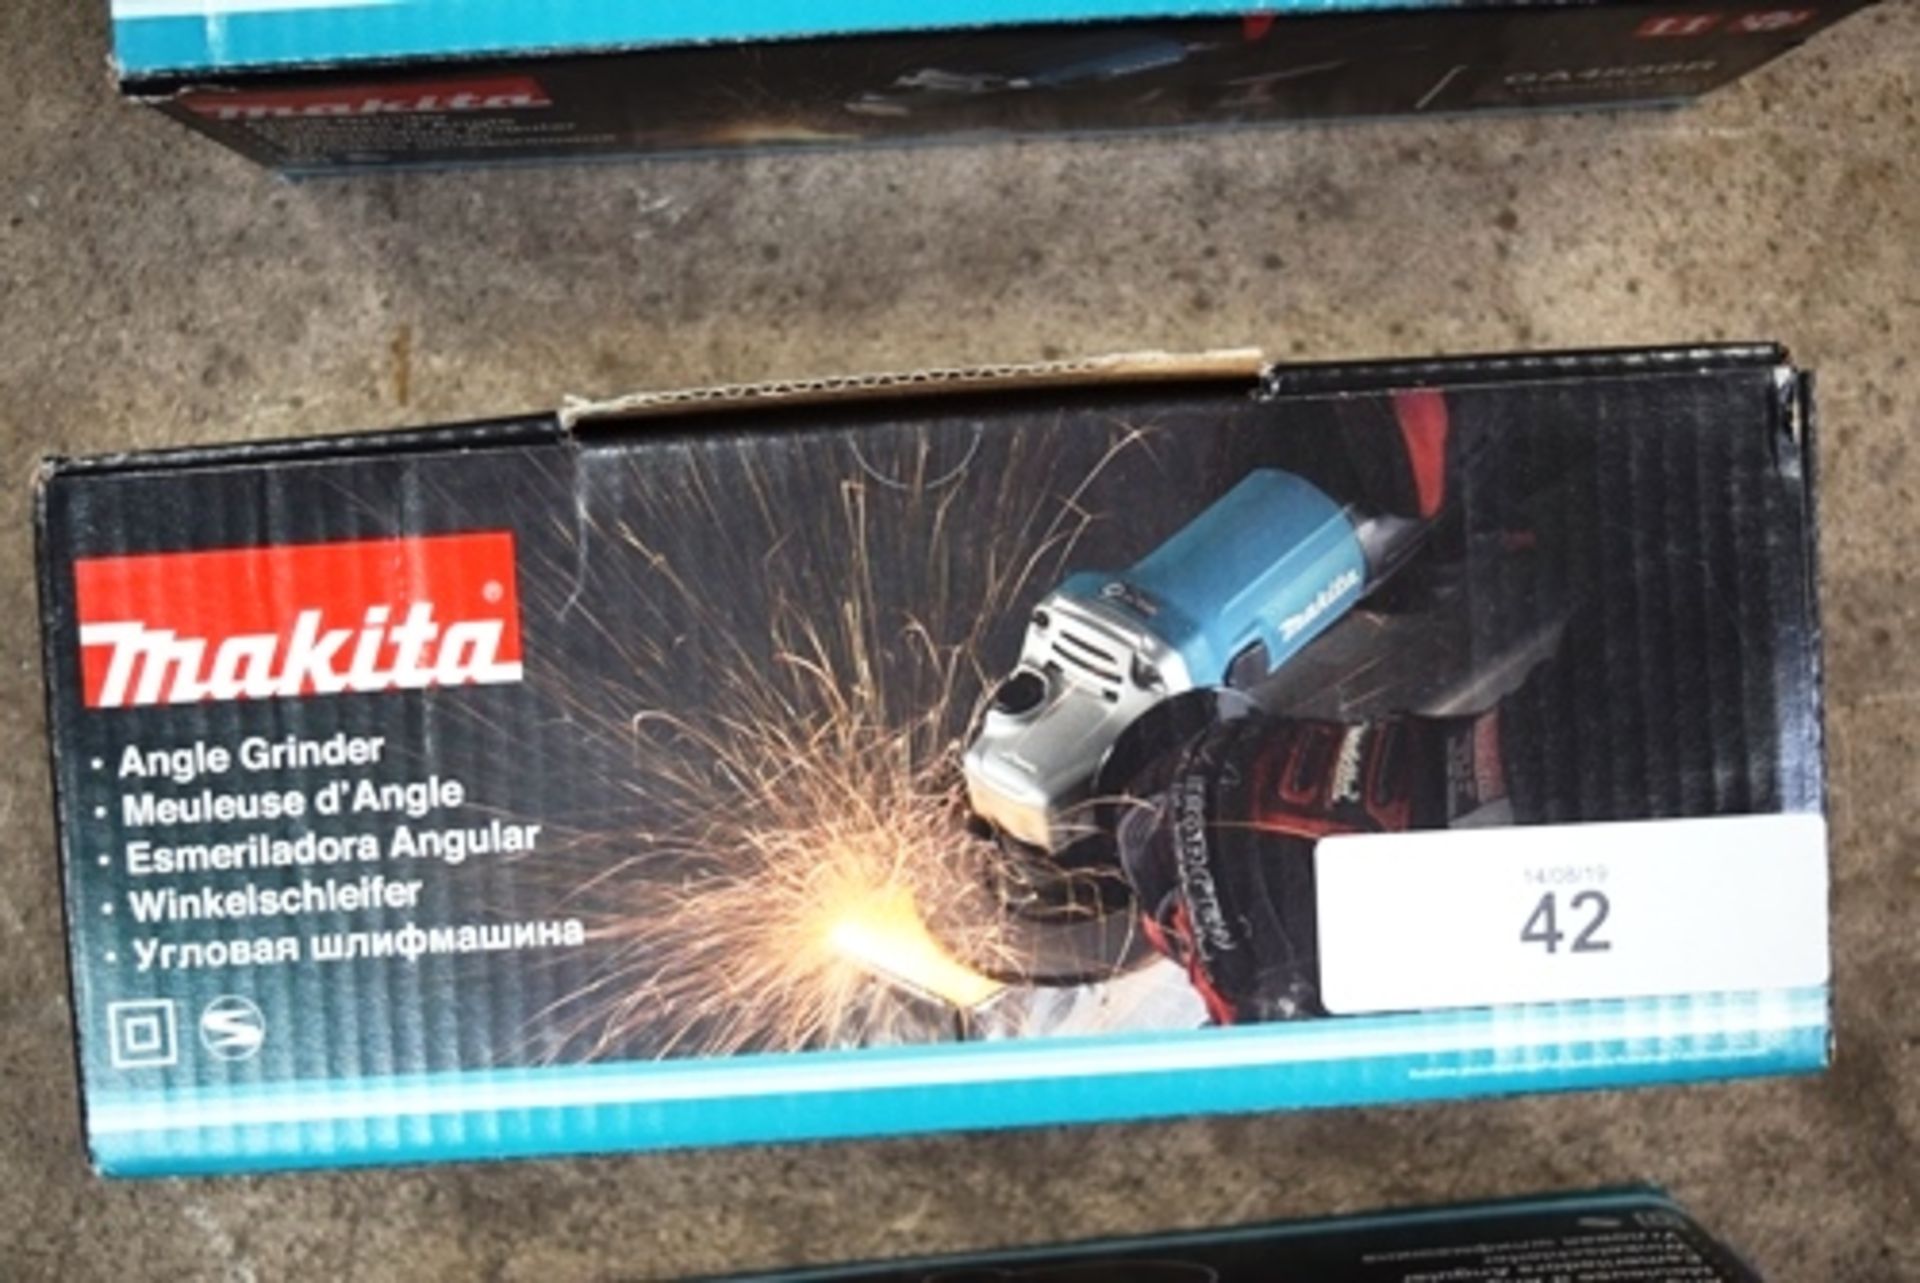 A Makita GA4530R 115mm, 240V angle grinder, RRP £46.00 - New in box (Cage3)